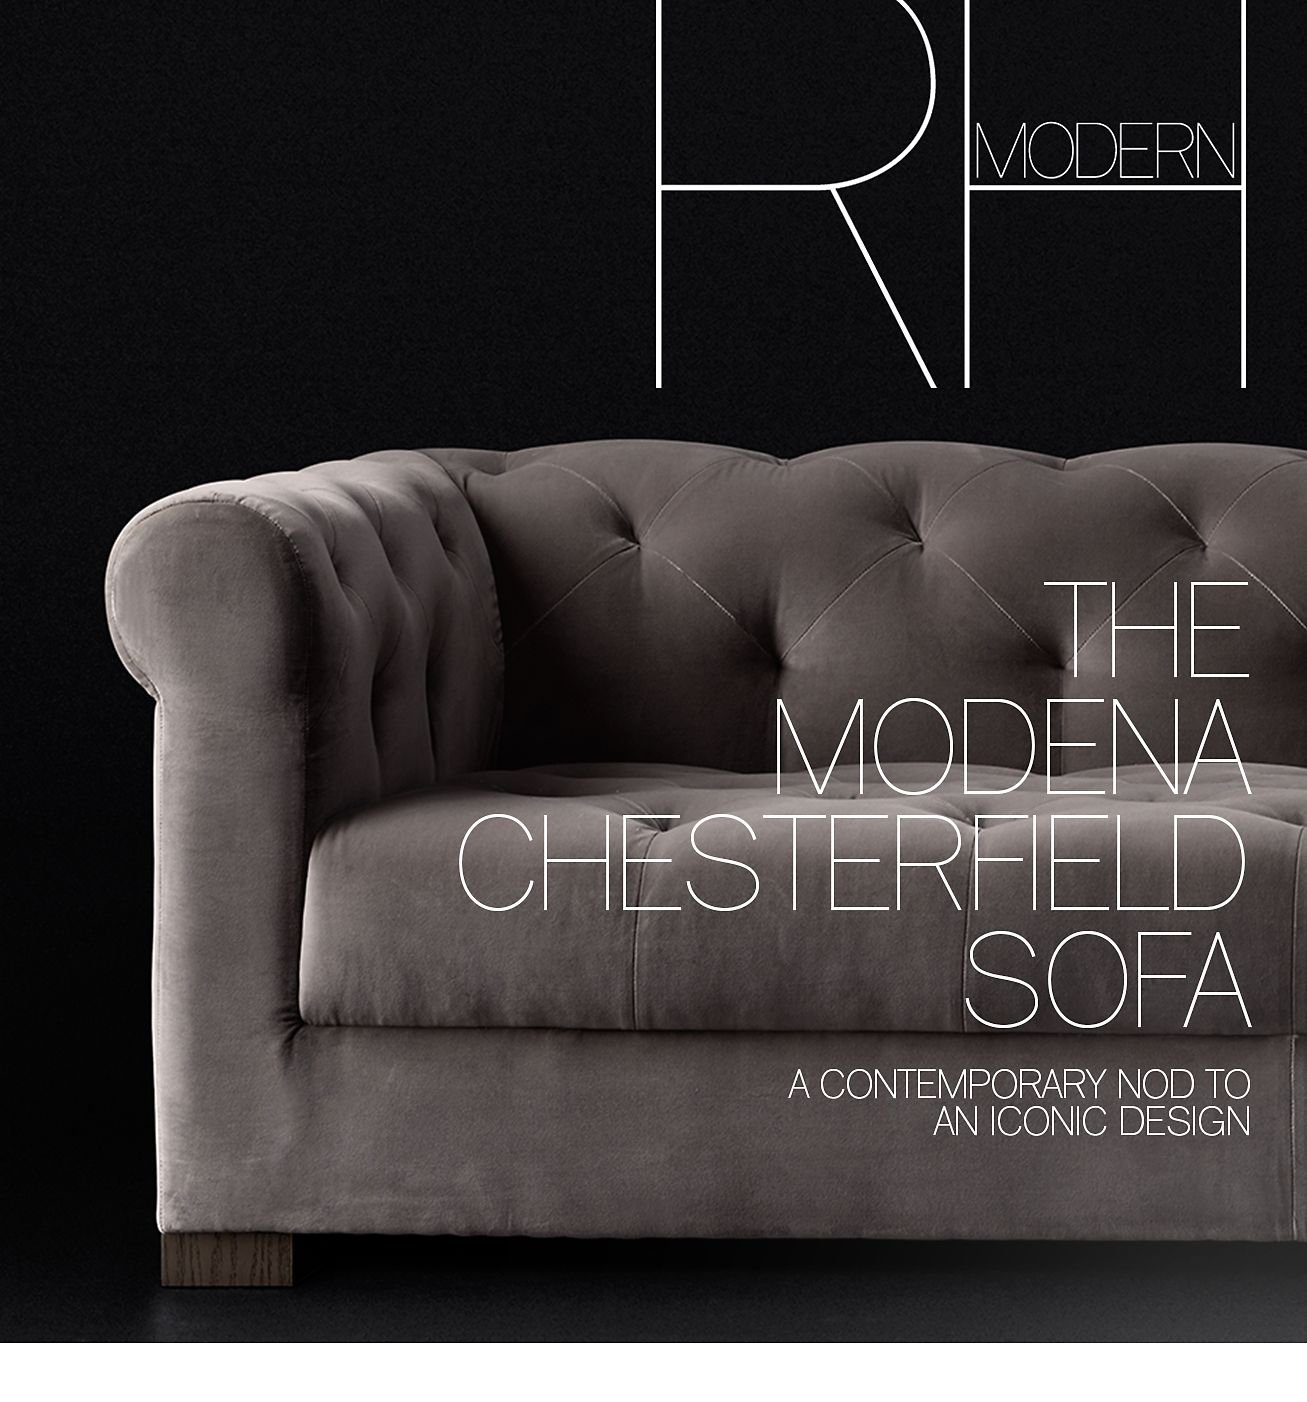 Restoration Hardware Explore The Modena Chesterfield Sofa The